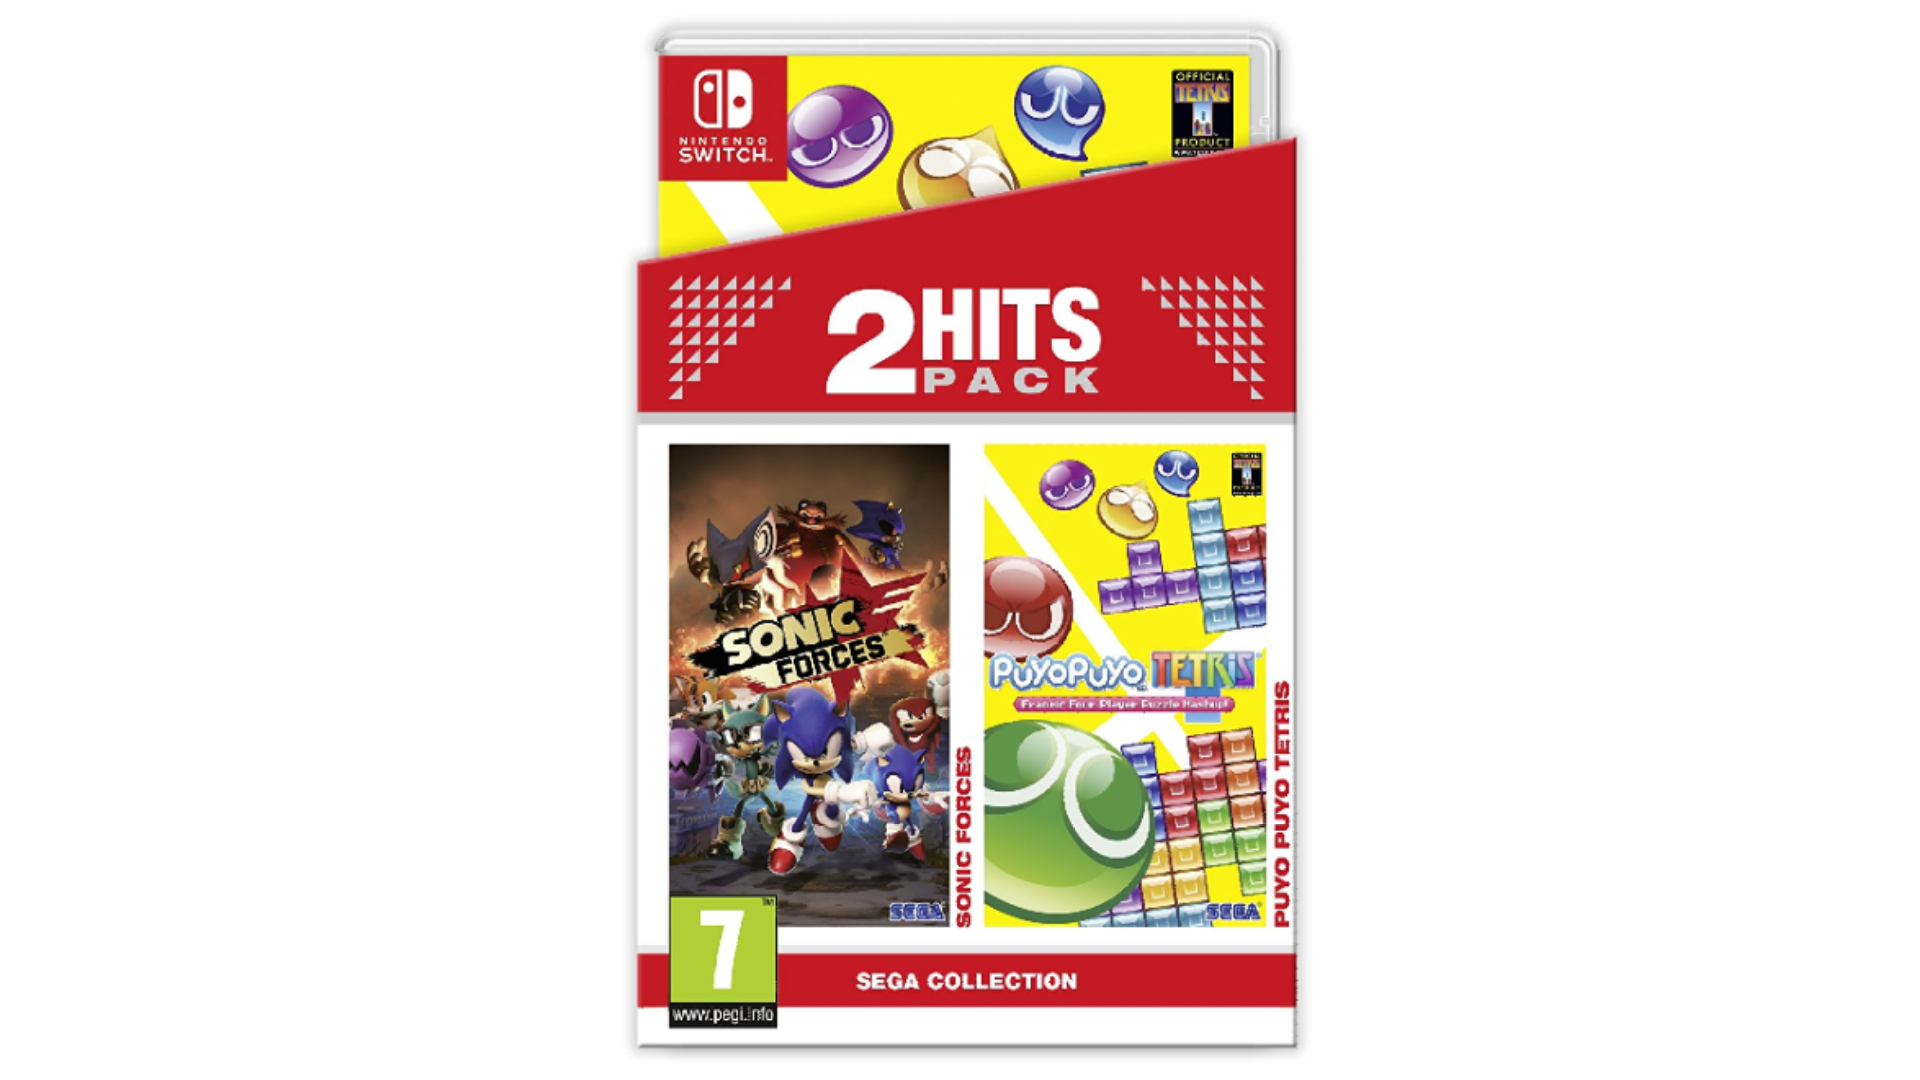 Europa recibirá este 2 Hits Pack: Sonic Forces / Puyo Puyo Tetris en enero